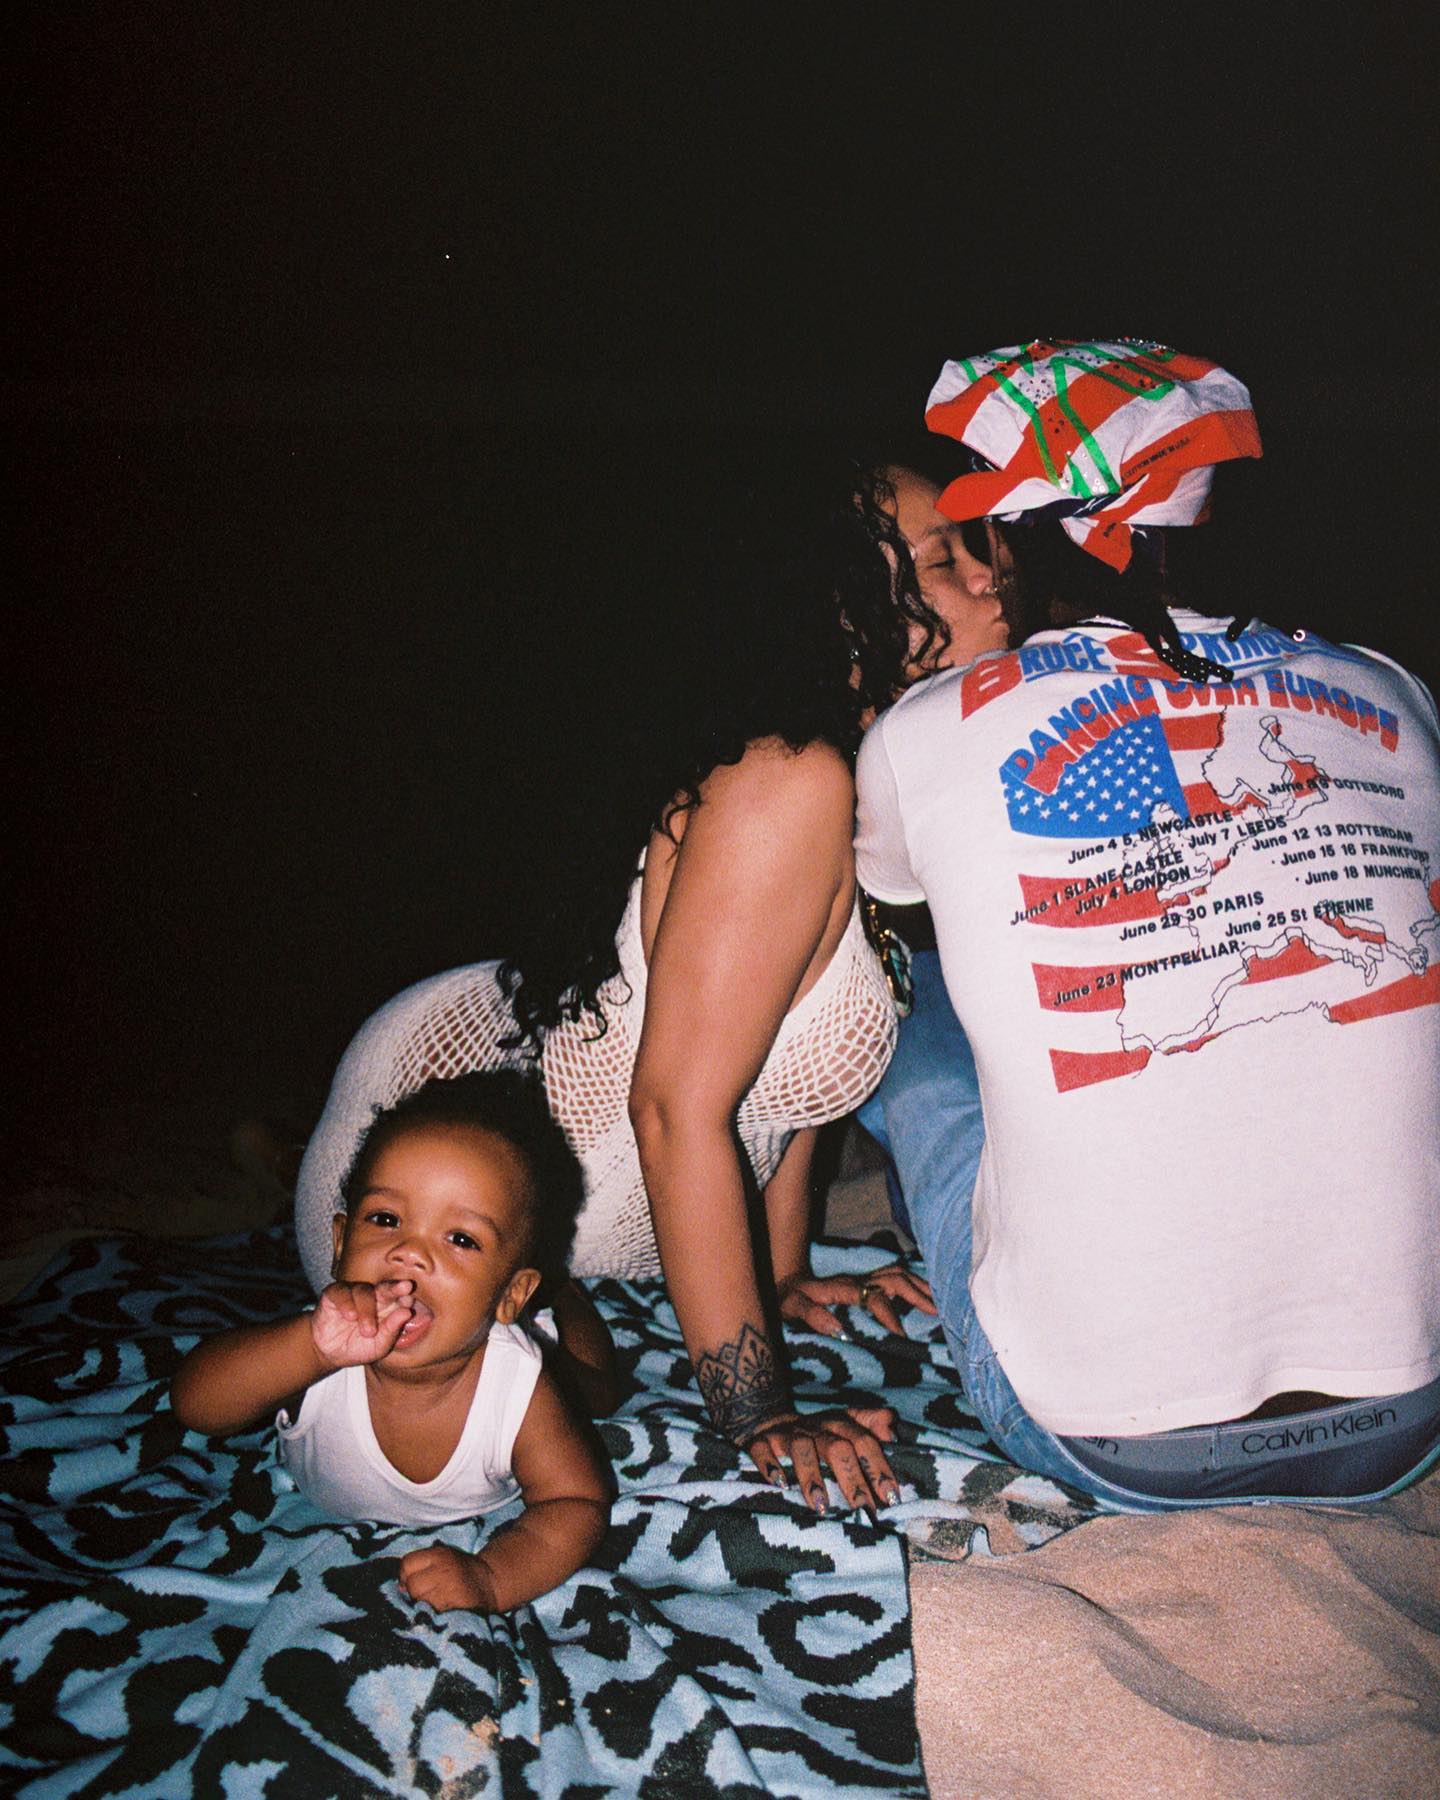 Rihanna Secretly Gives Birth to Baby Boy with A$AP Rocky